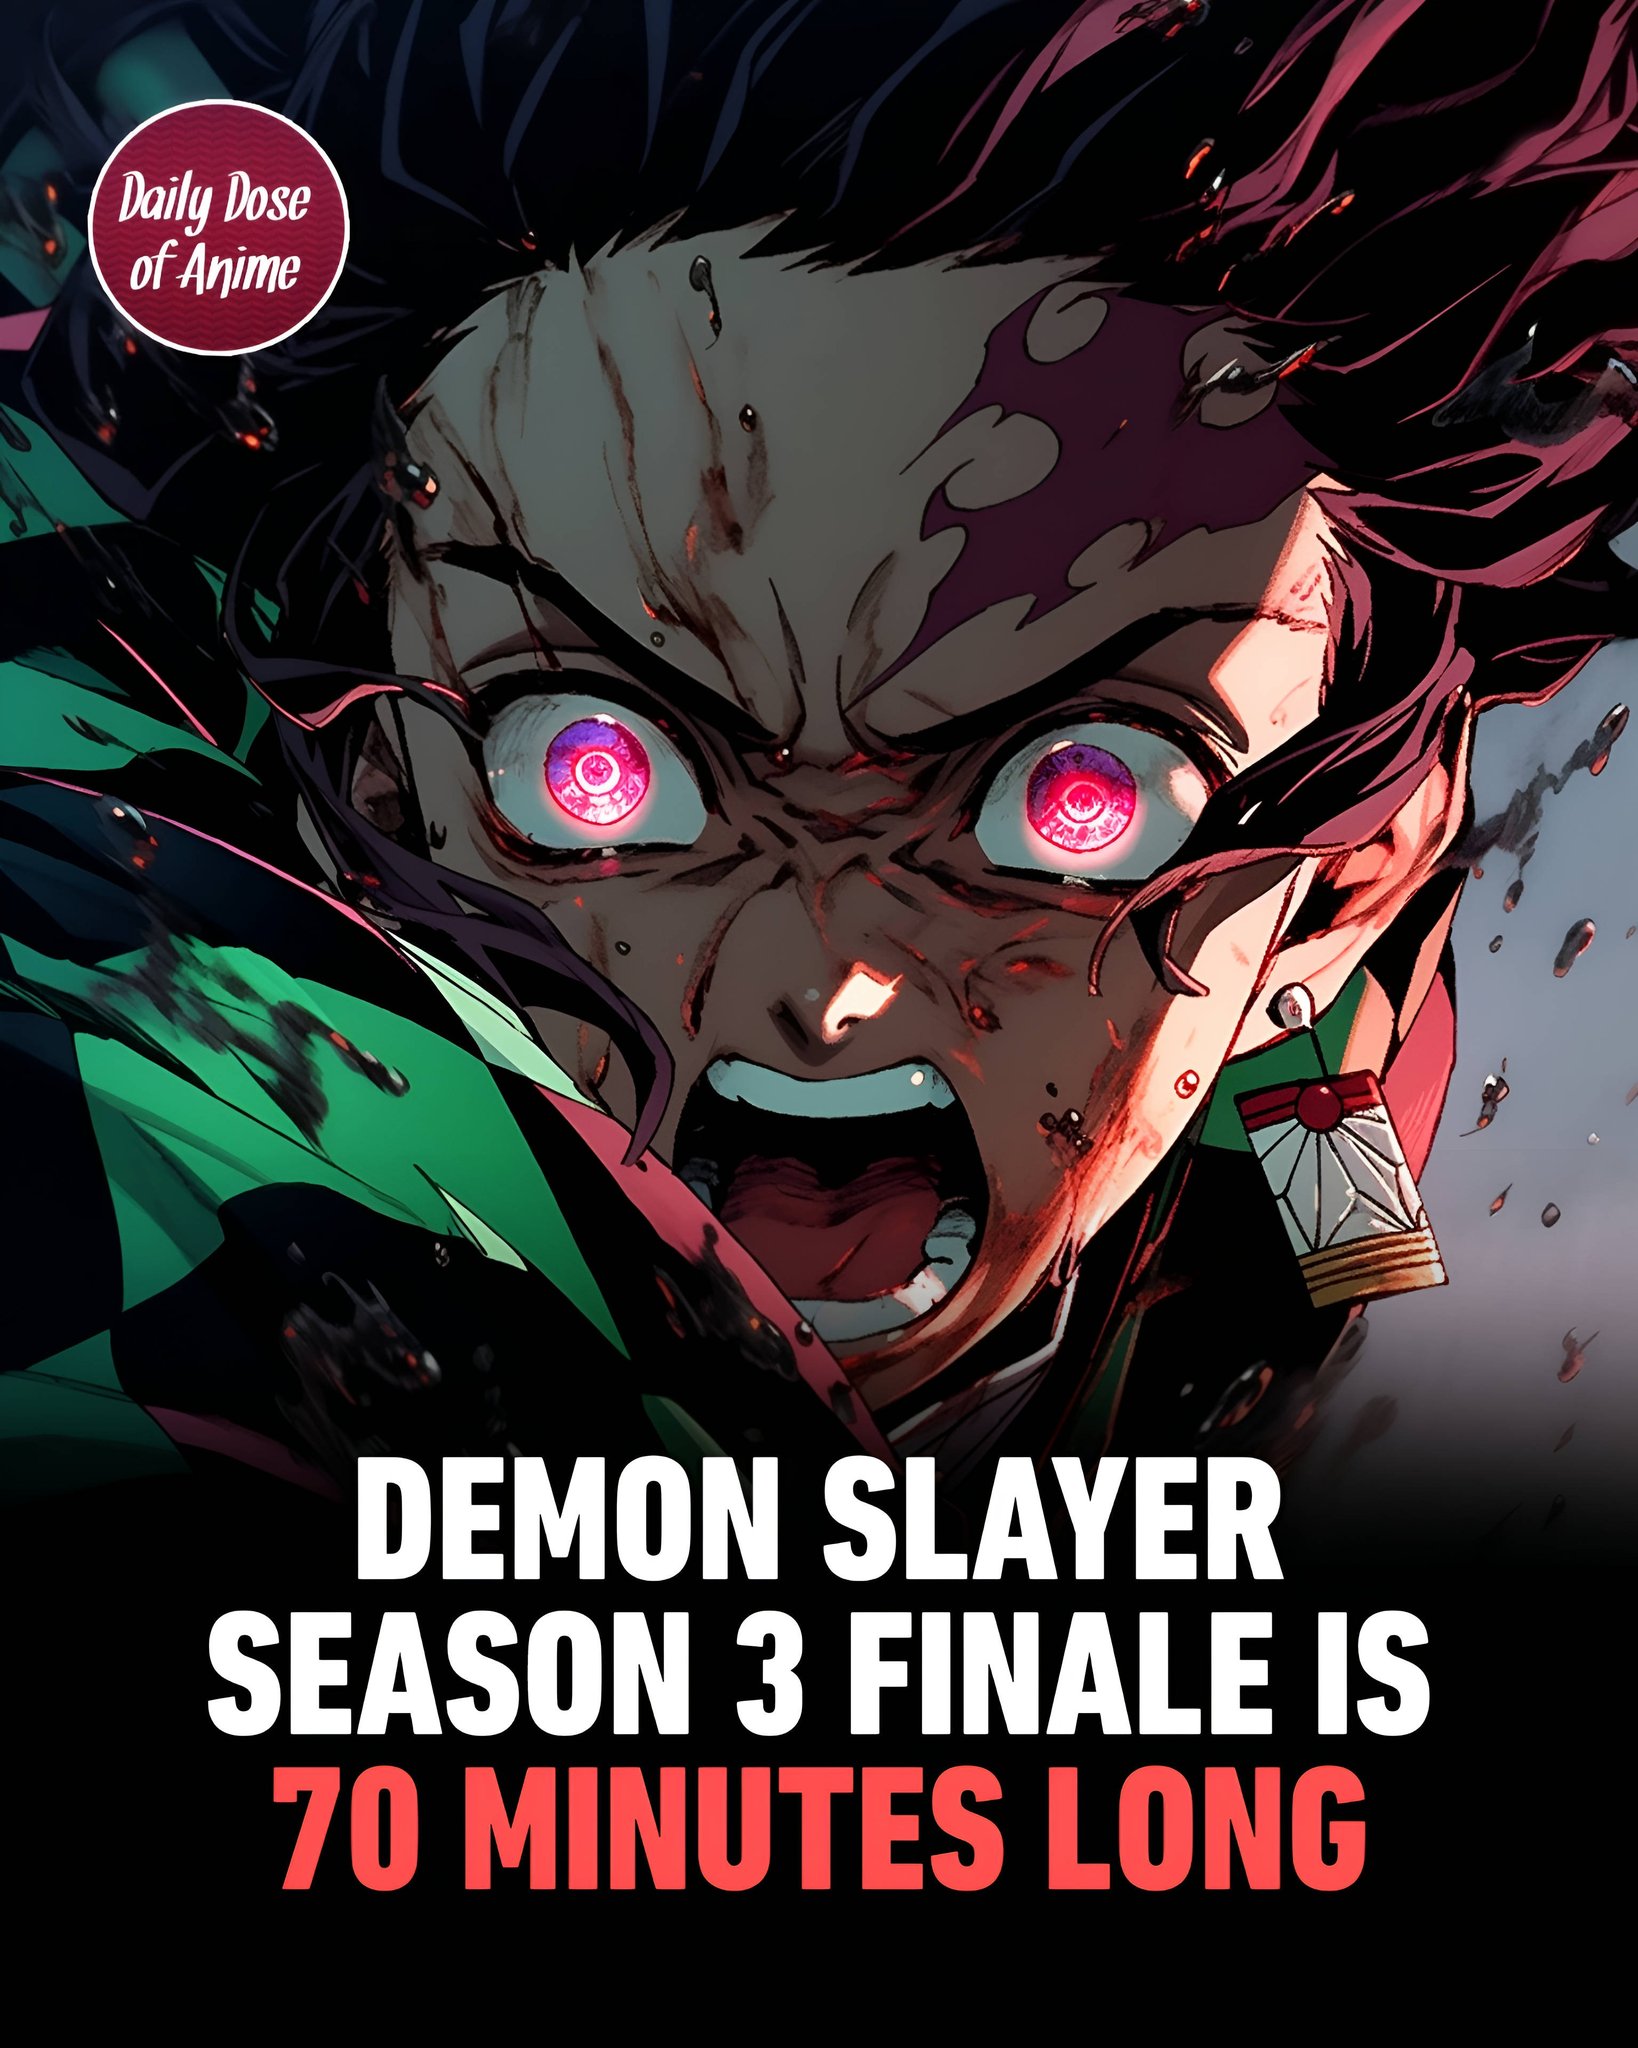 Demon Slayer Season 3 Episode 11: Final Episode 70 MINUTES LONG